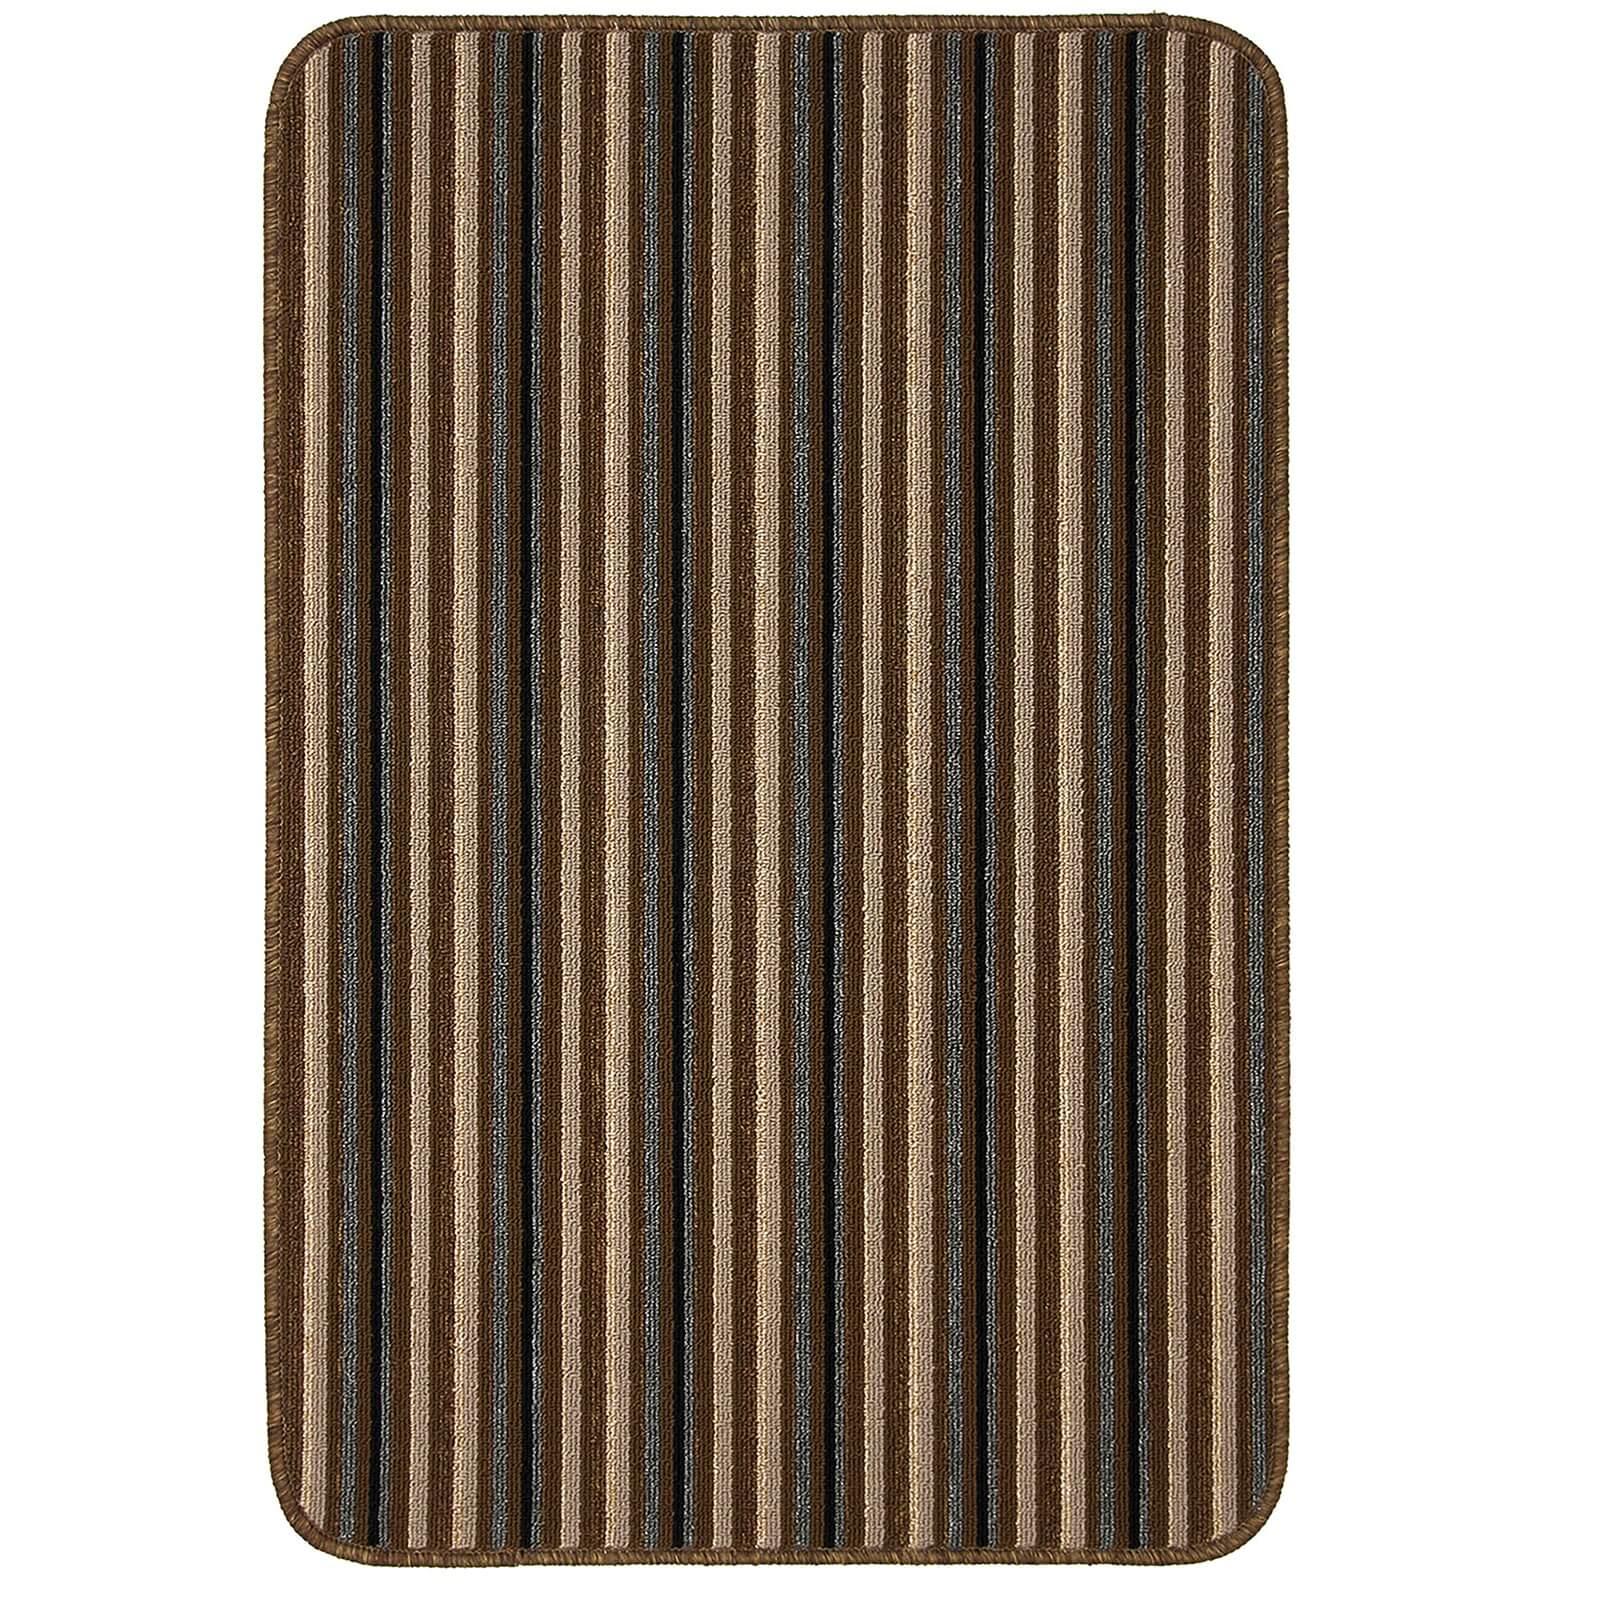 Java washable stripe mat Chocolate - 50 x 80cm